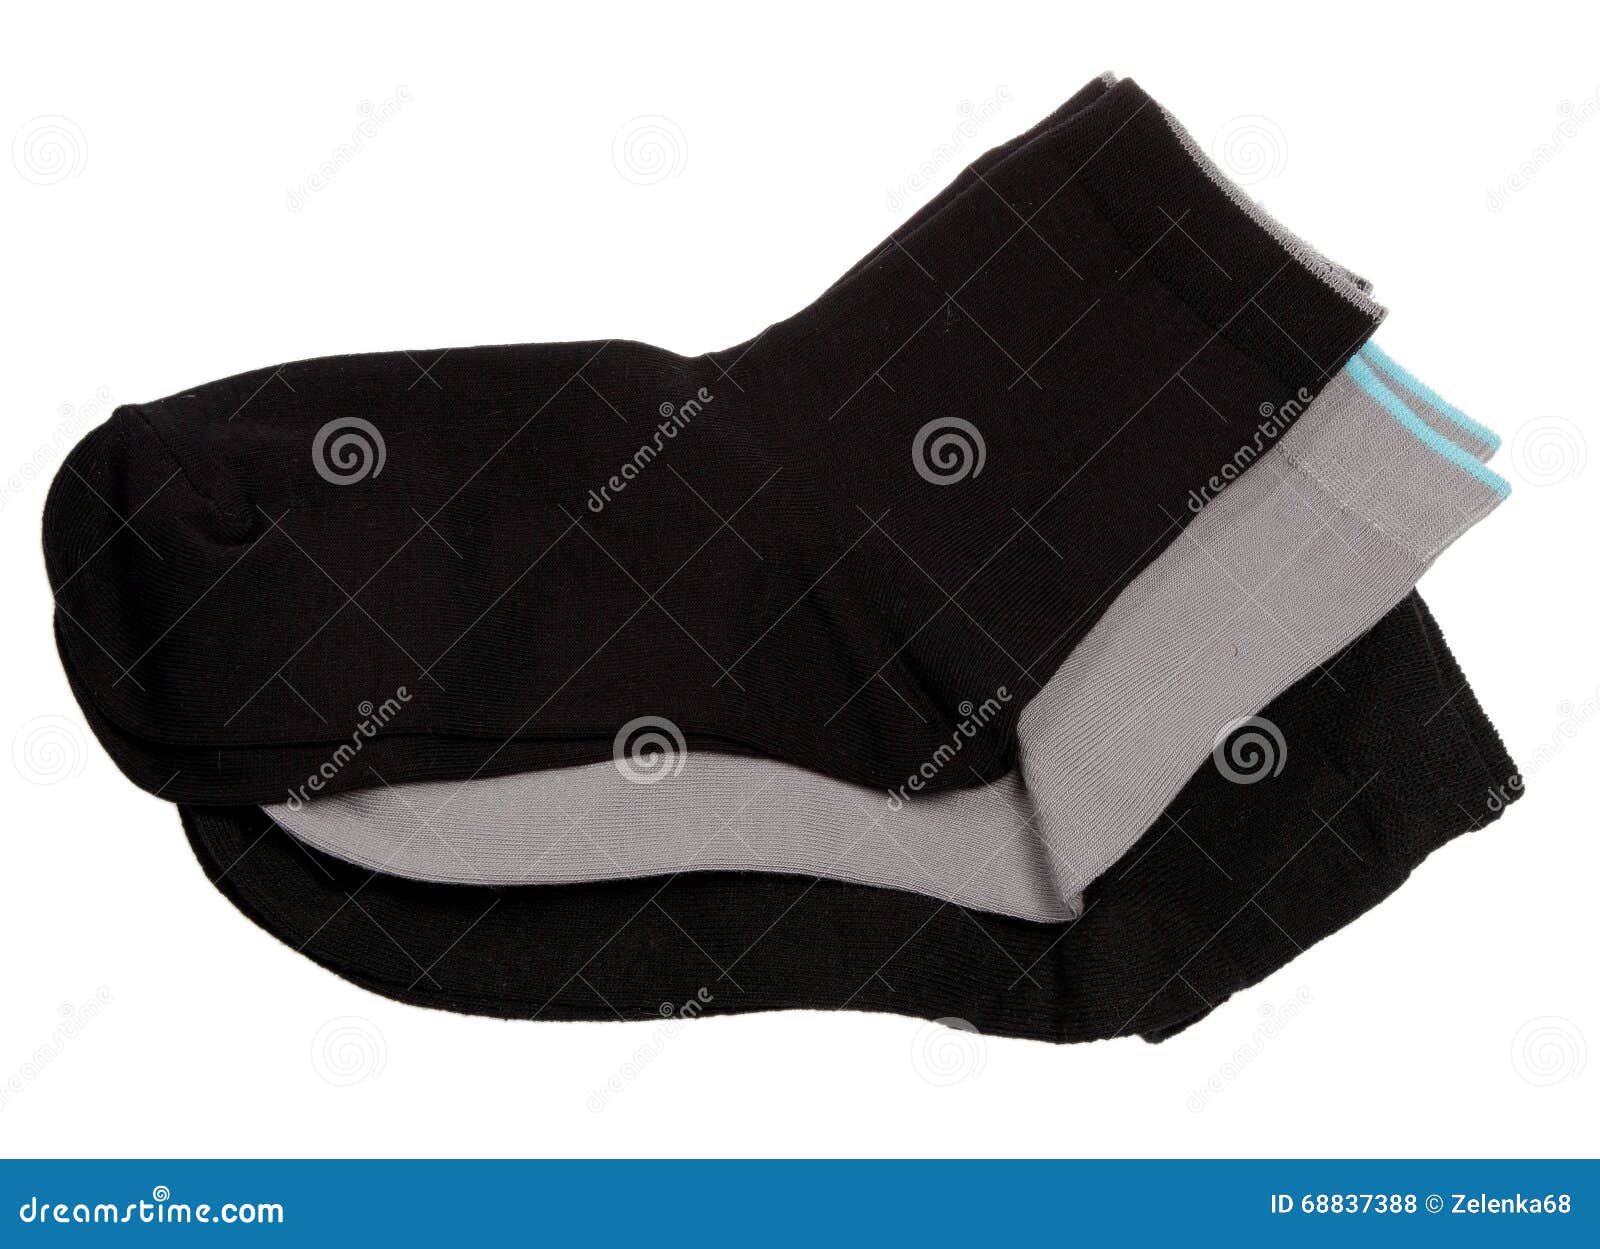 Socks on a White Background Stock Photo - Image of background, thread ...